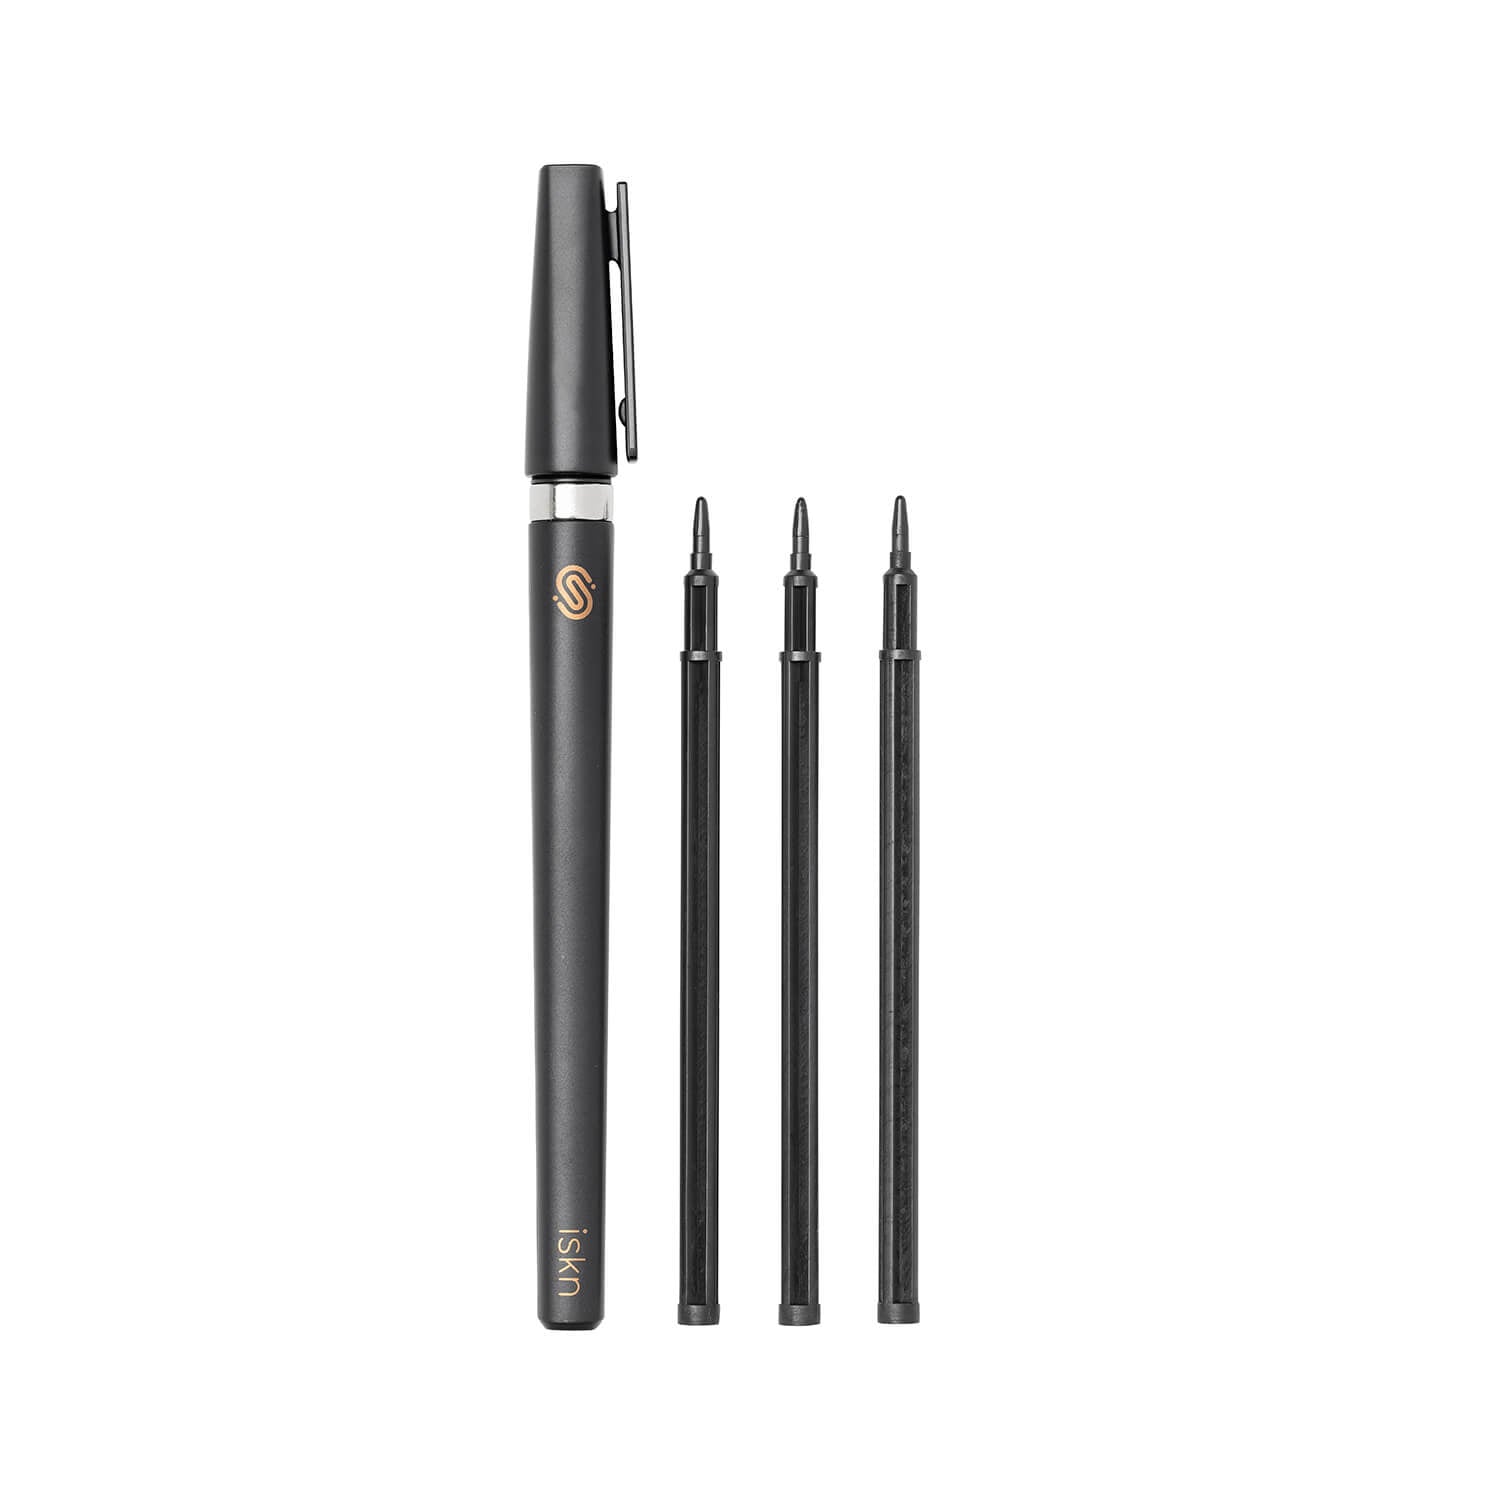 The Pen - Two digital pens by iskn